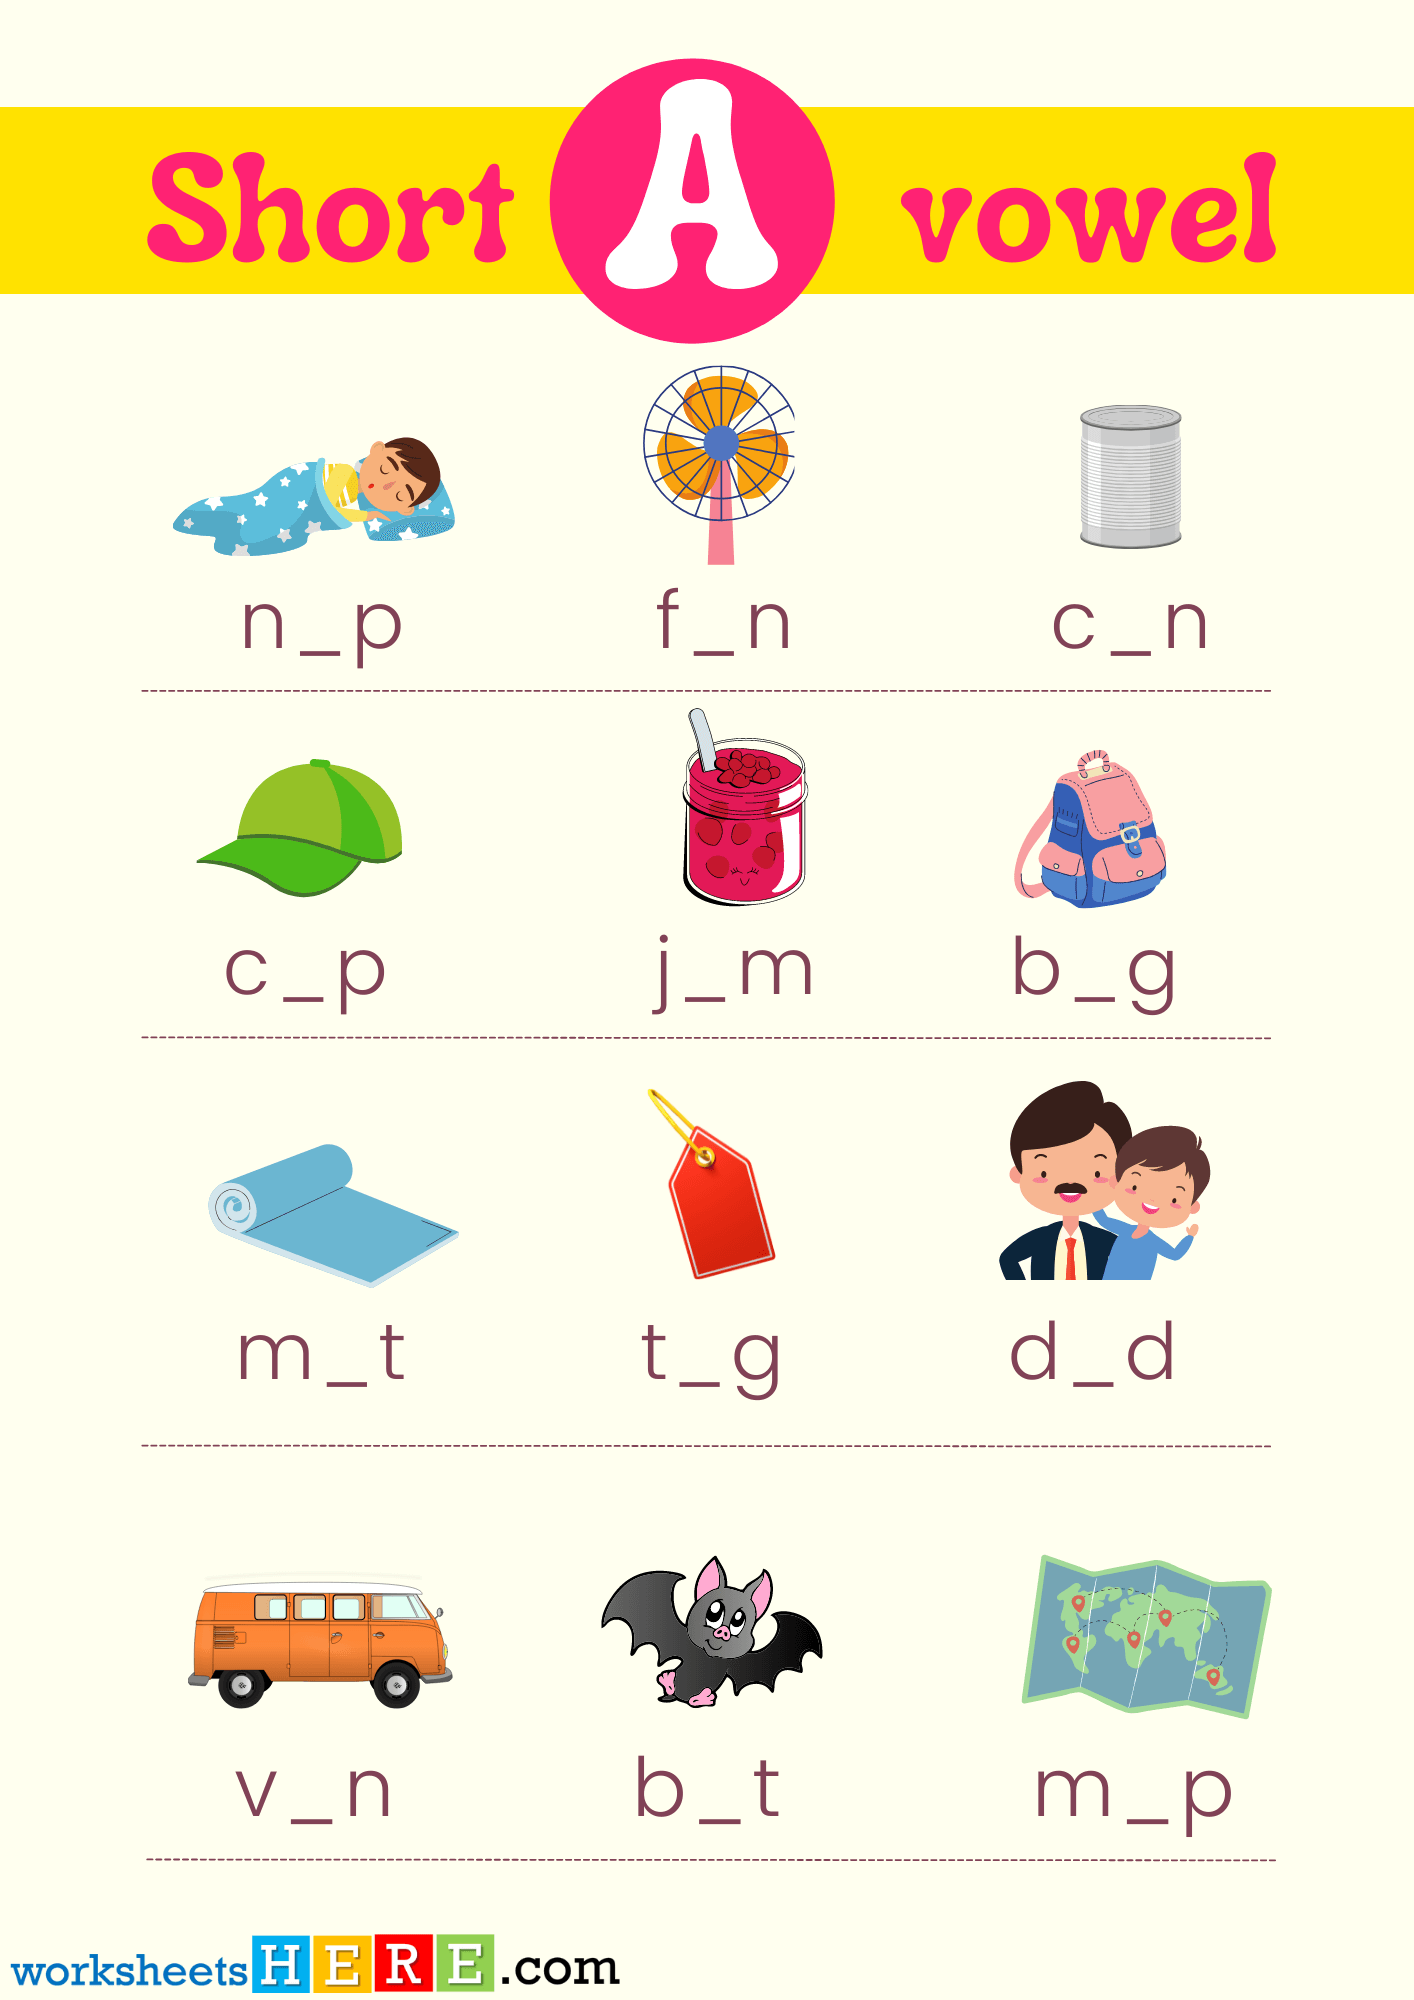 Find Missing Short Vowel A With Pictures PDF Worksheet For Kindergarten and Kids